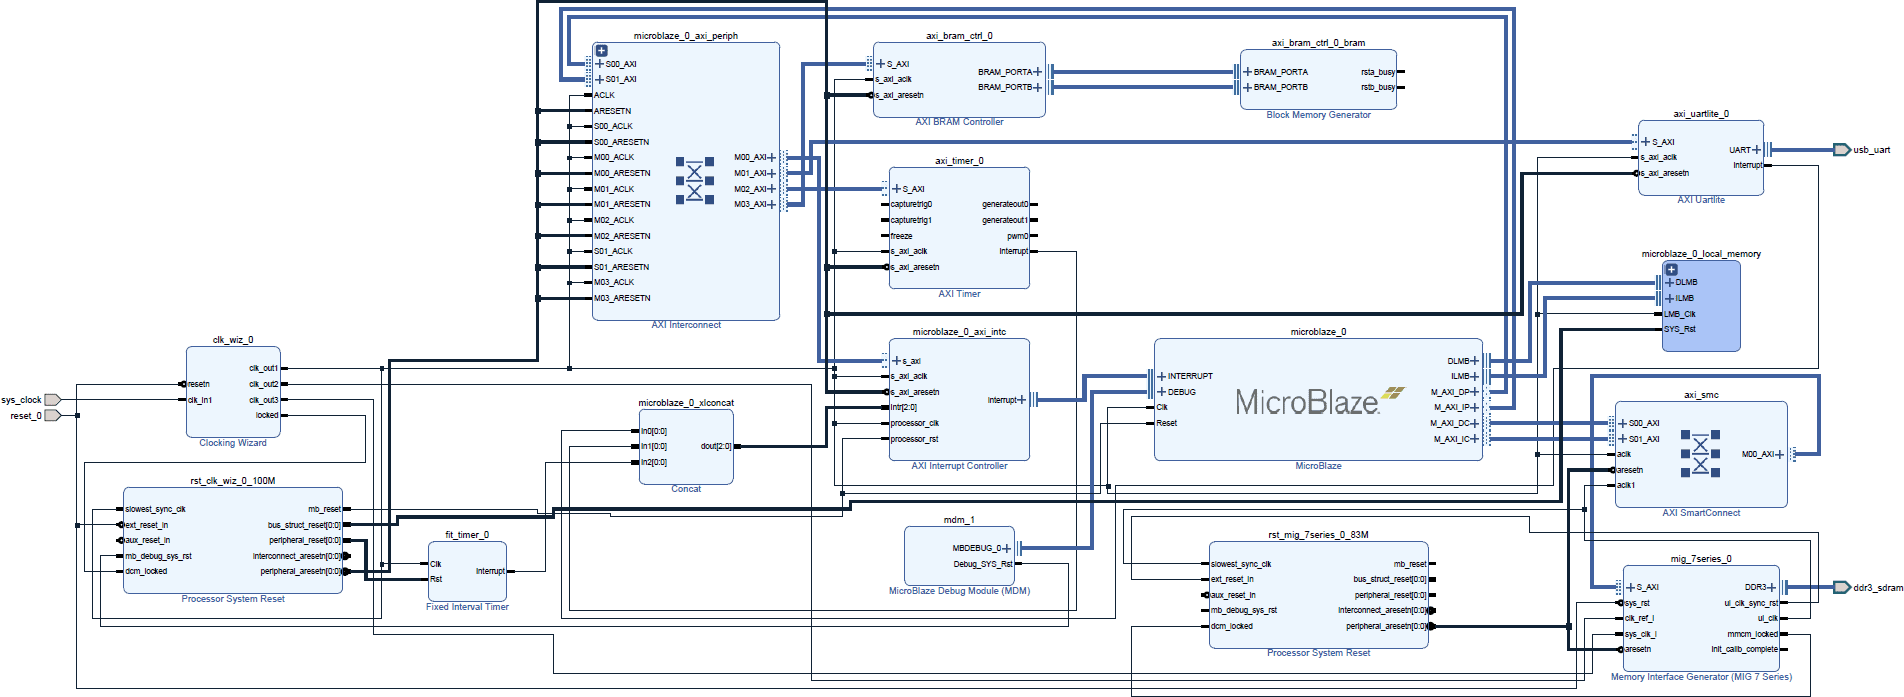 Block diagram of a MicroBlaze design in the Xilinx Vivado IP integrator.